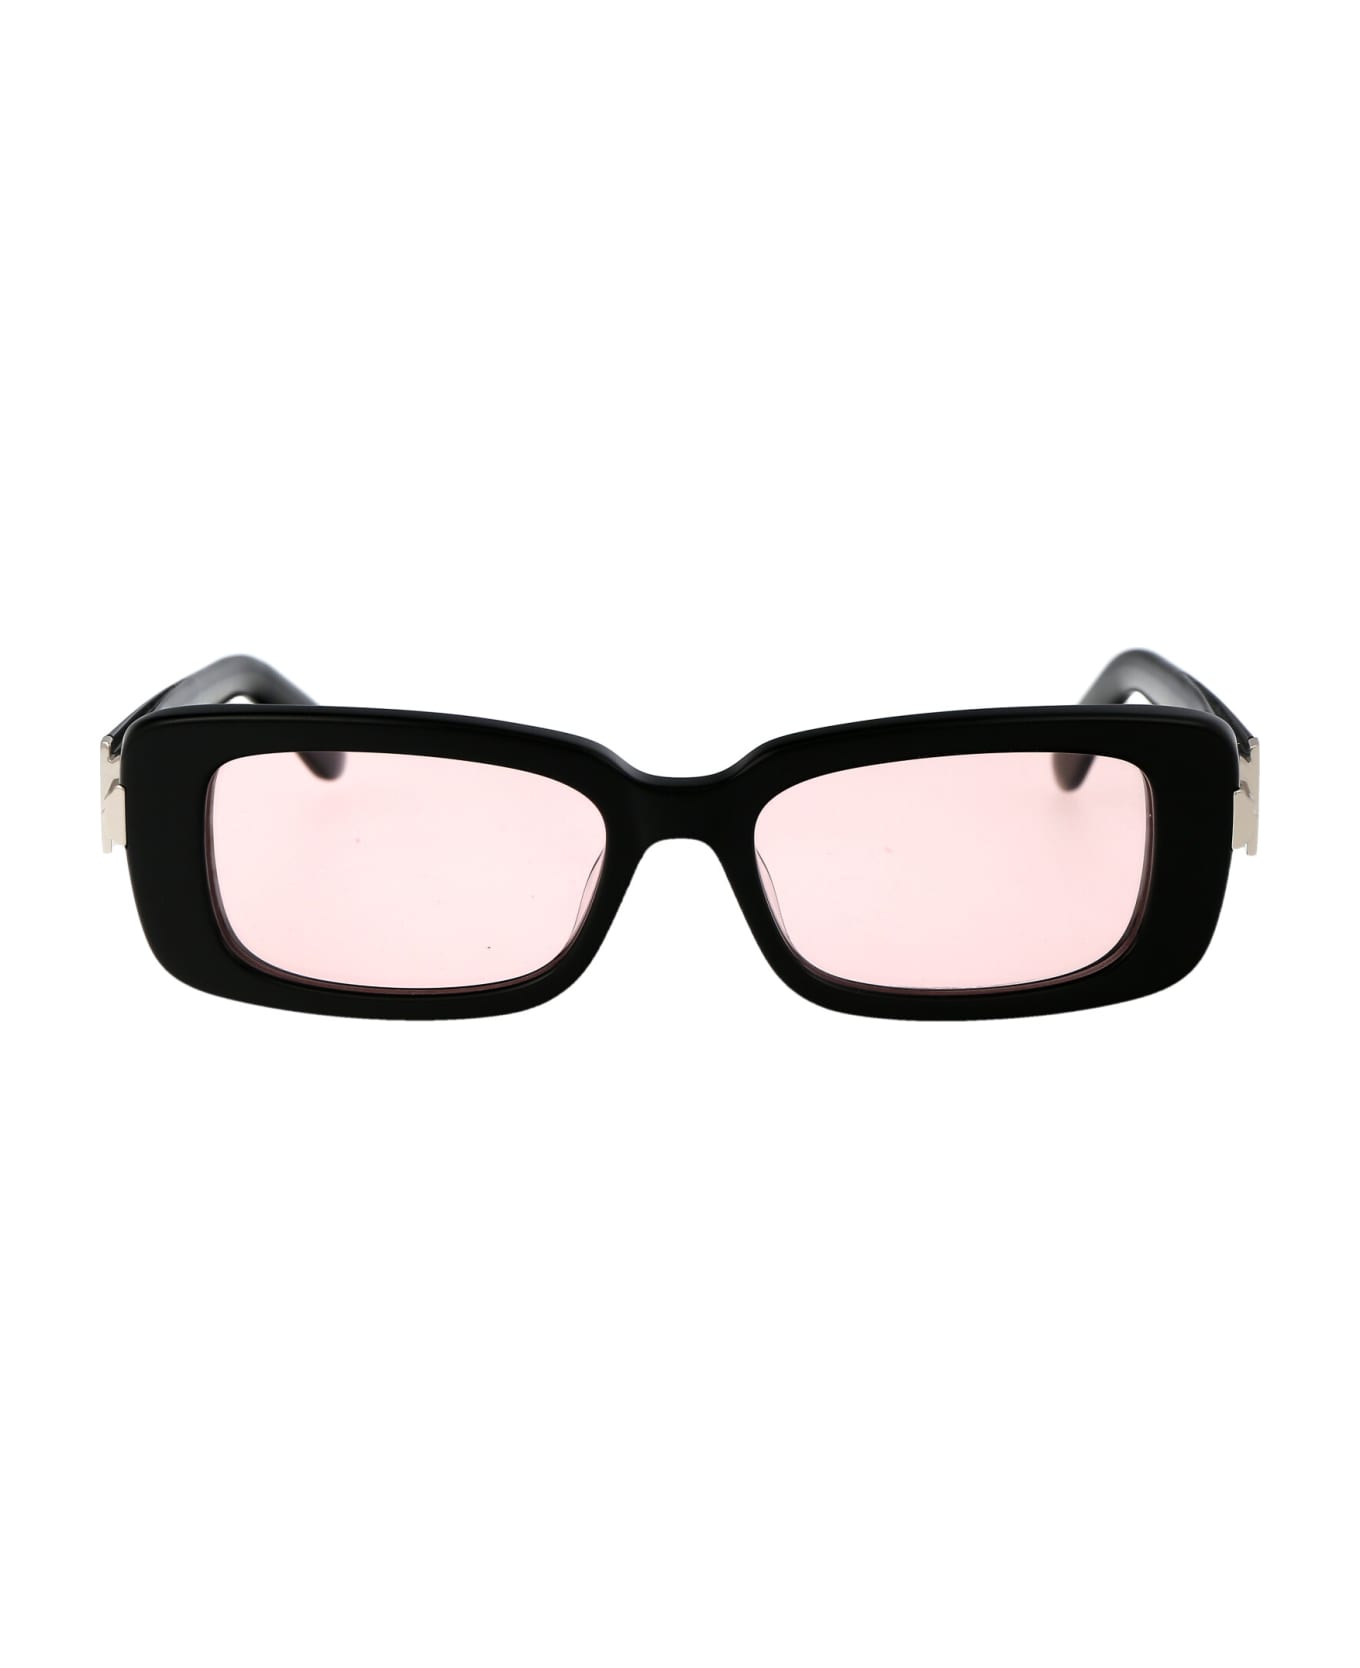 Salvatore Ferragamo Eyewear Sf1105s Sunglasses - 005 BLACK PINK